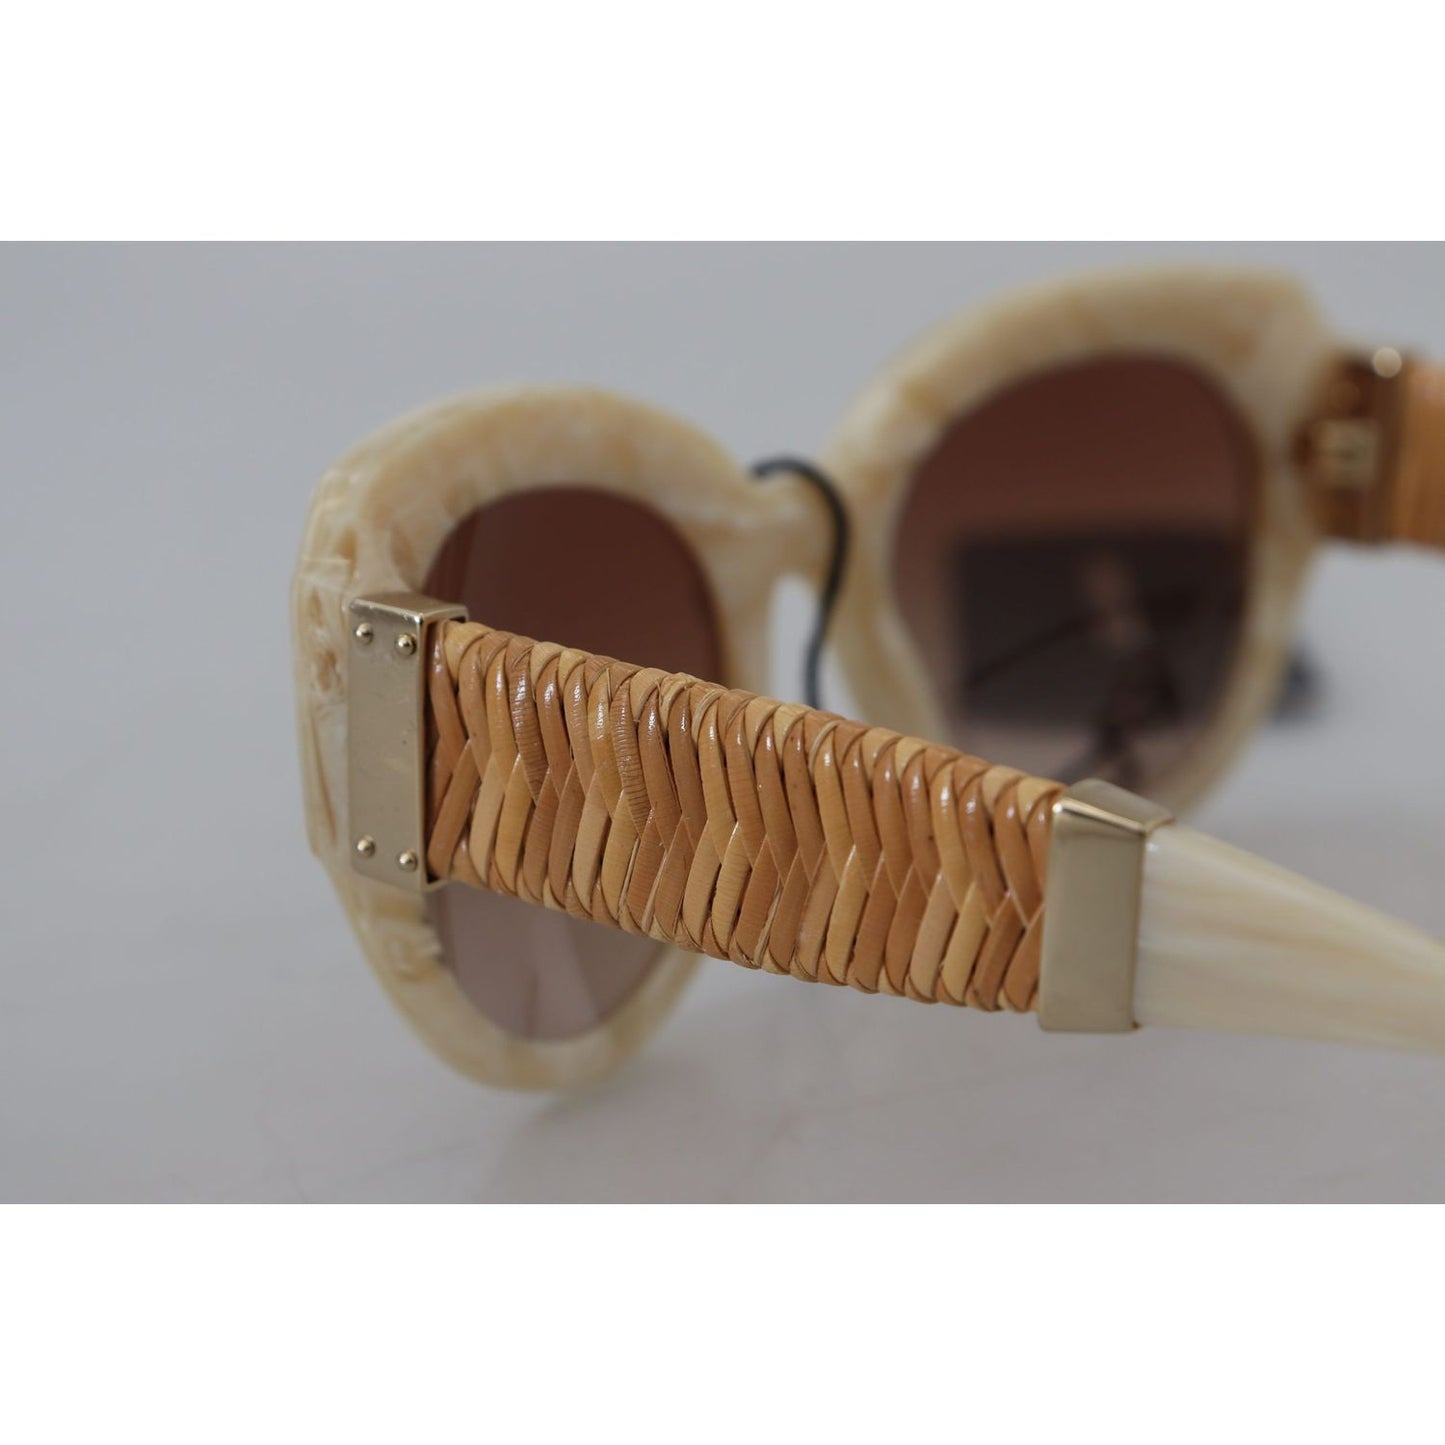 Dolce & Gabbana Beige Chic Acetate Women's Sunglasses beige-acetate-full-rim-brown-lense-dg4294-sunglasses